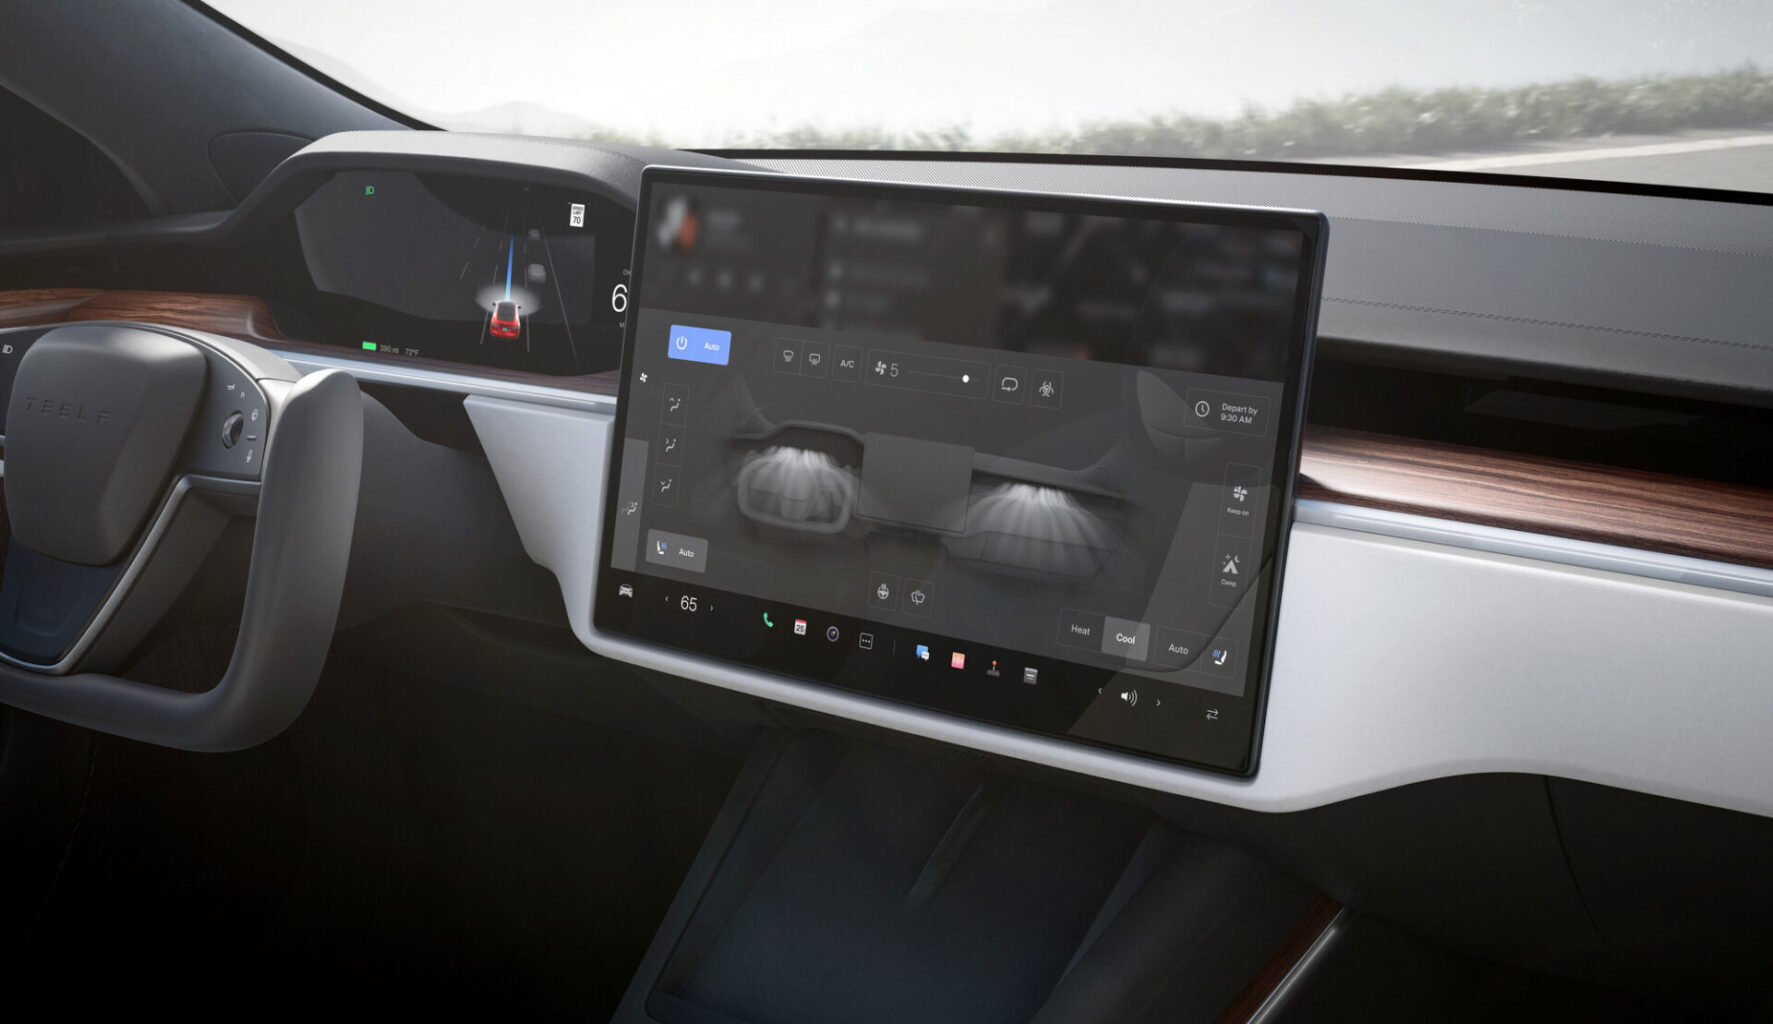 Tesla Model S dash